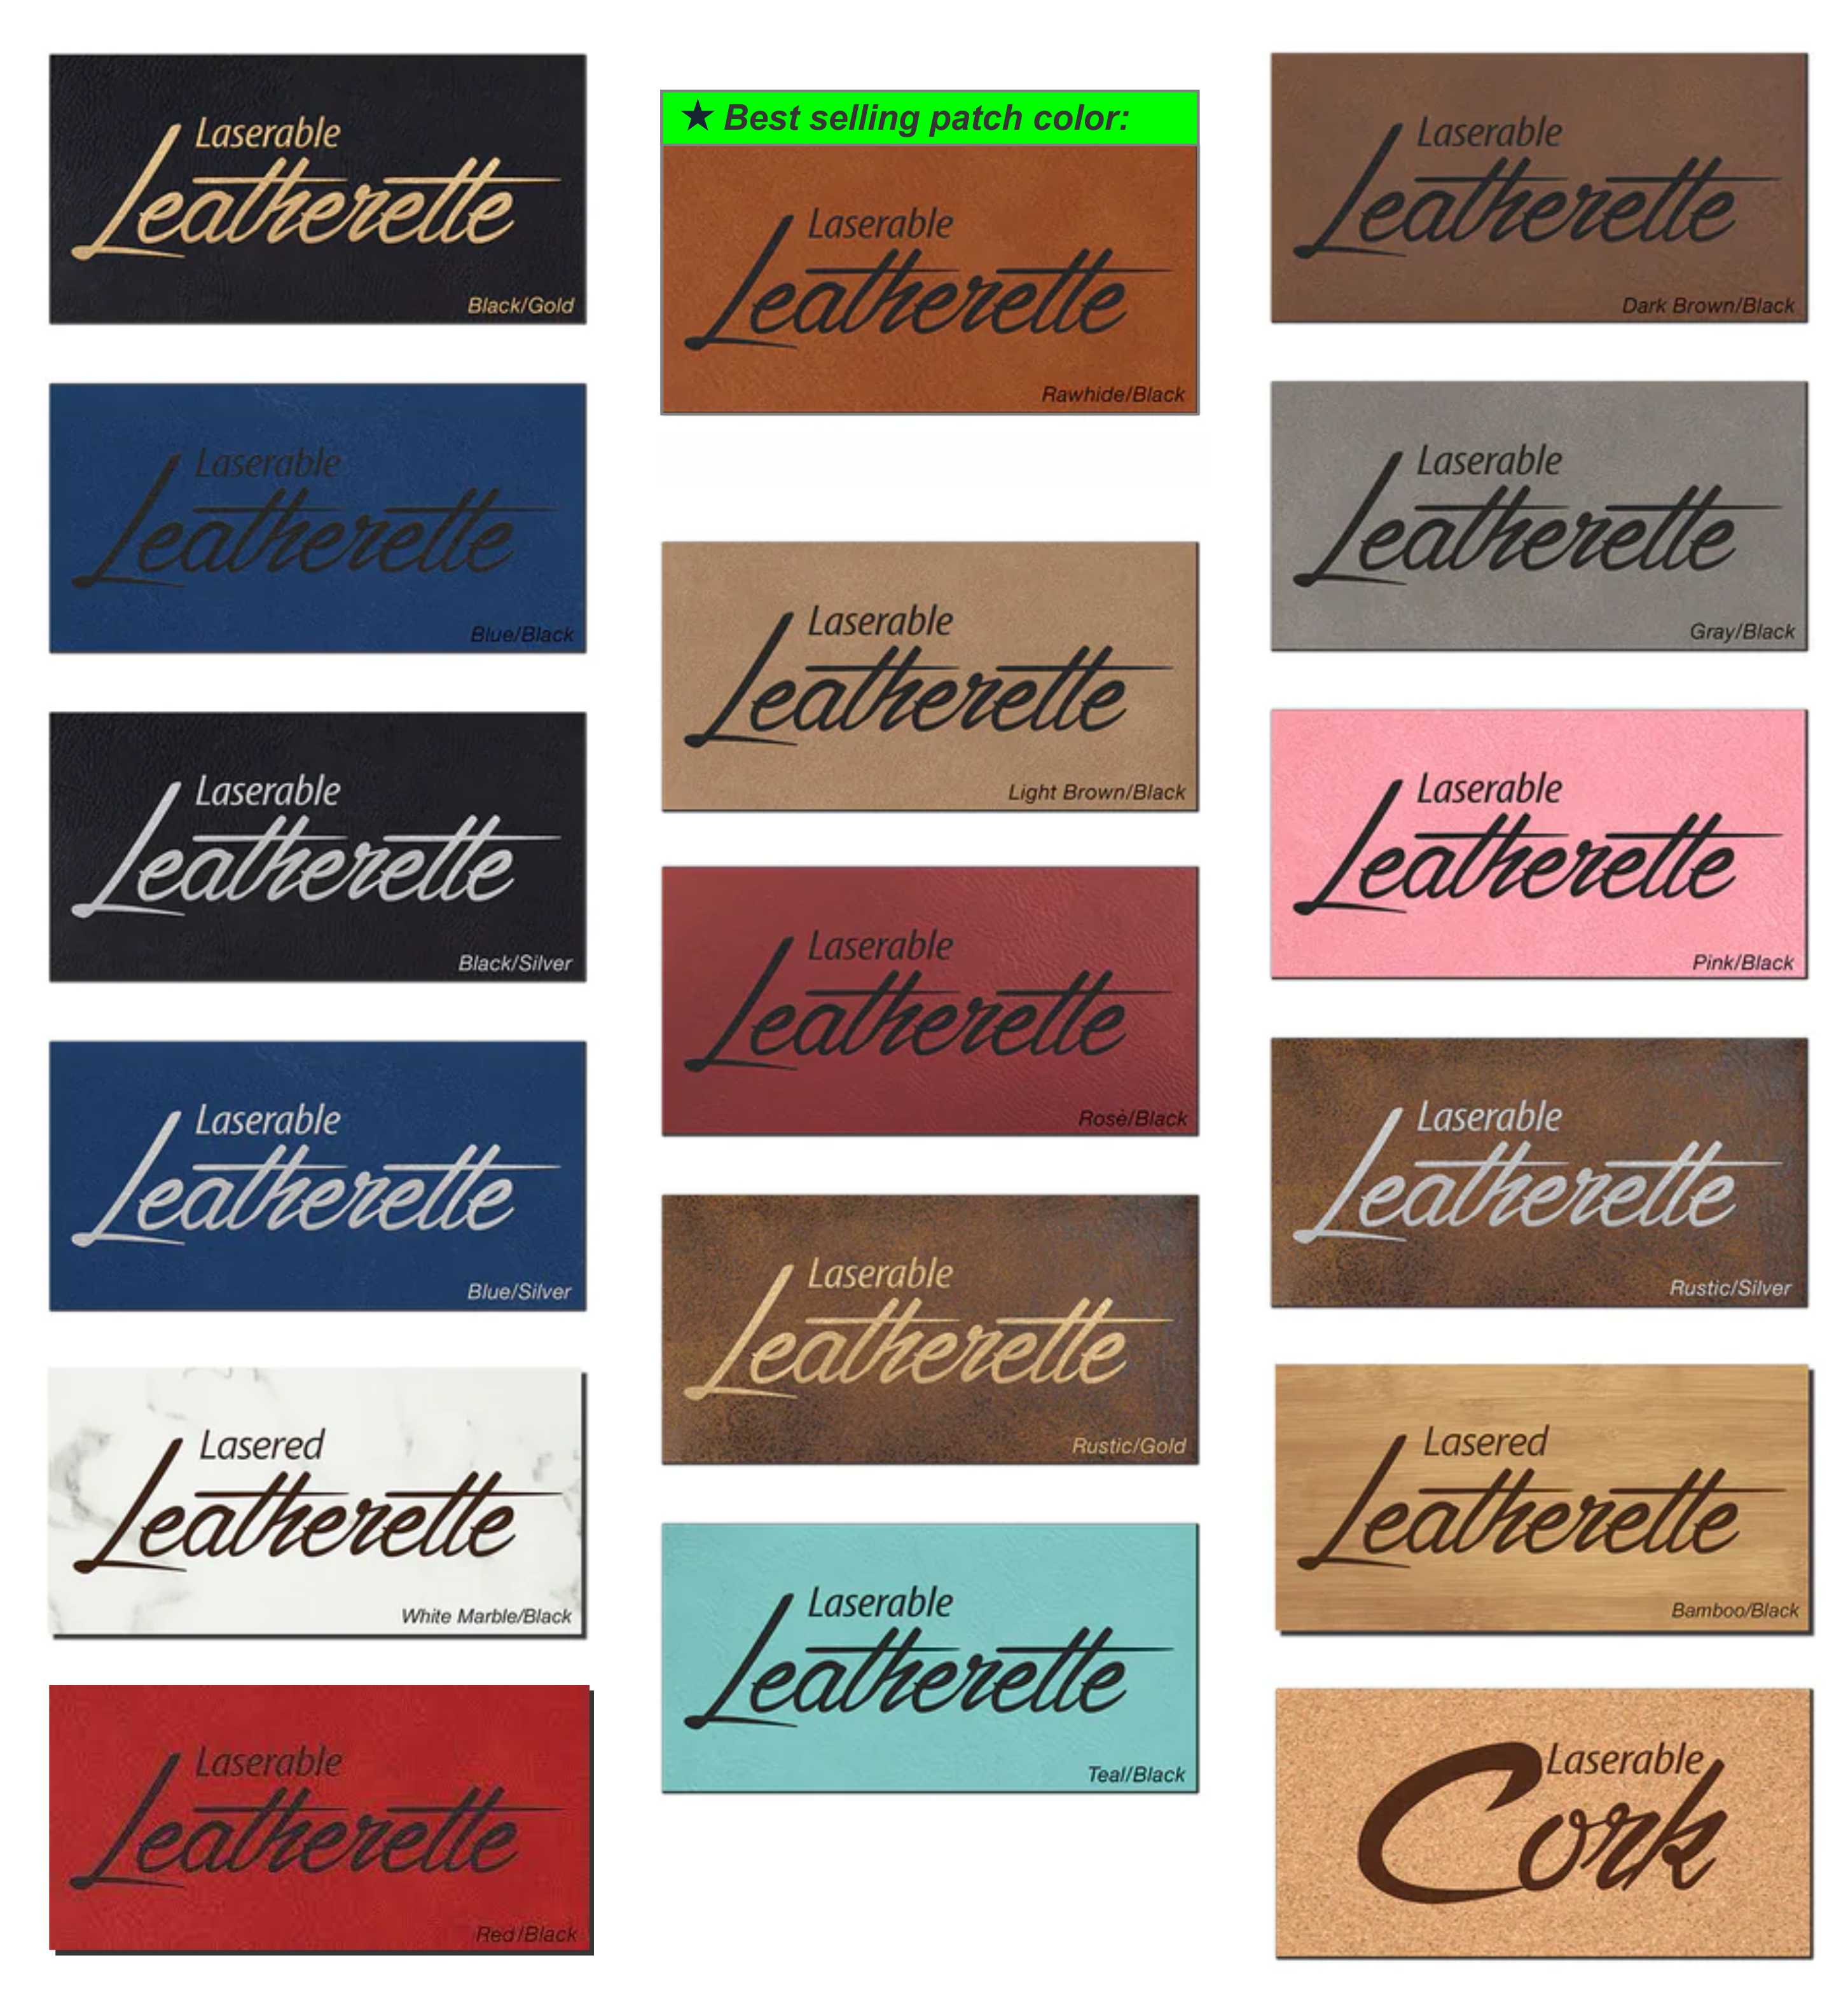 Leatherette patch - color options - 2022-09-23.jpg